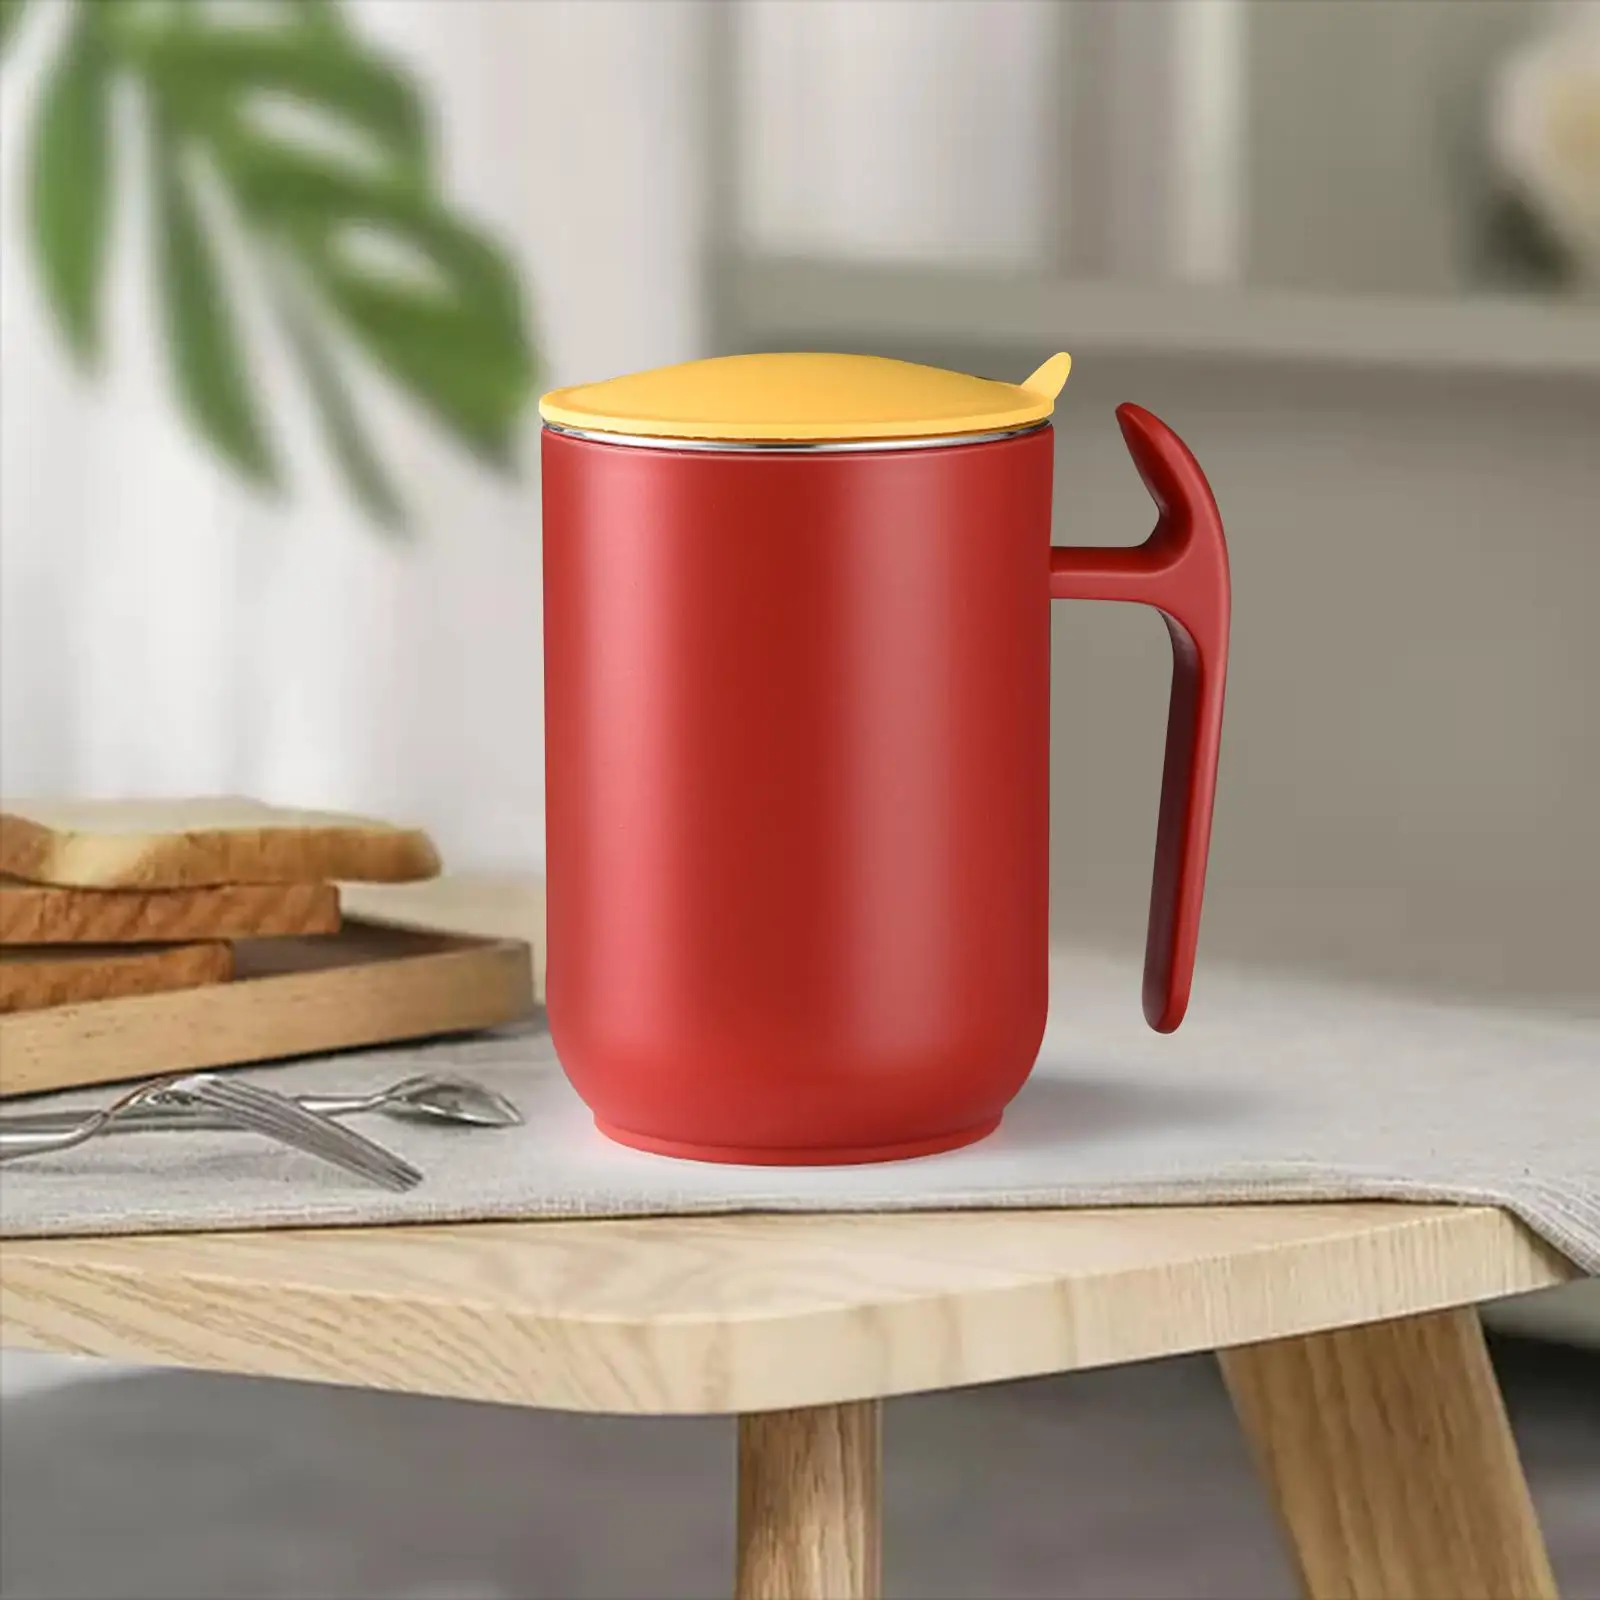 550ml Insulated Coffee Mug with Lid,Stainless Steel Coffee Cup,Vacuum Coffee Tumbler with Handle,Premium Thermal Coffee Mug